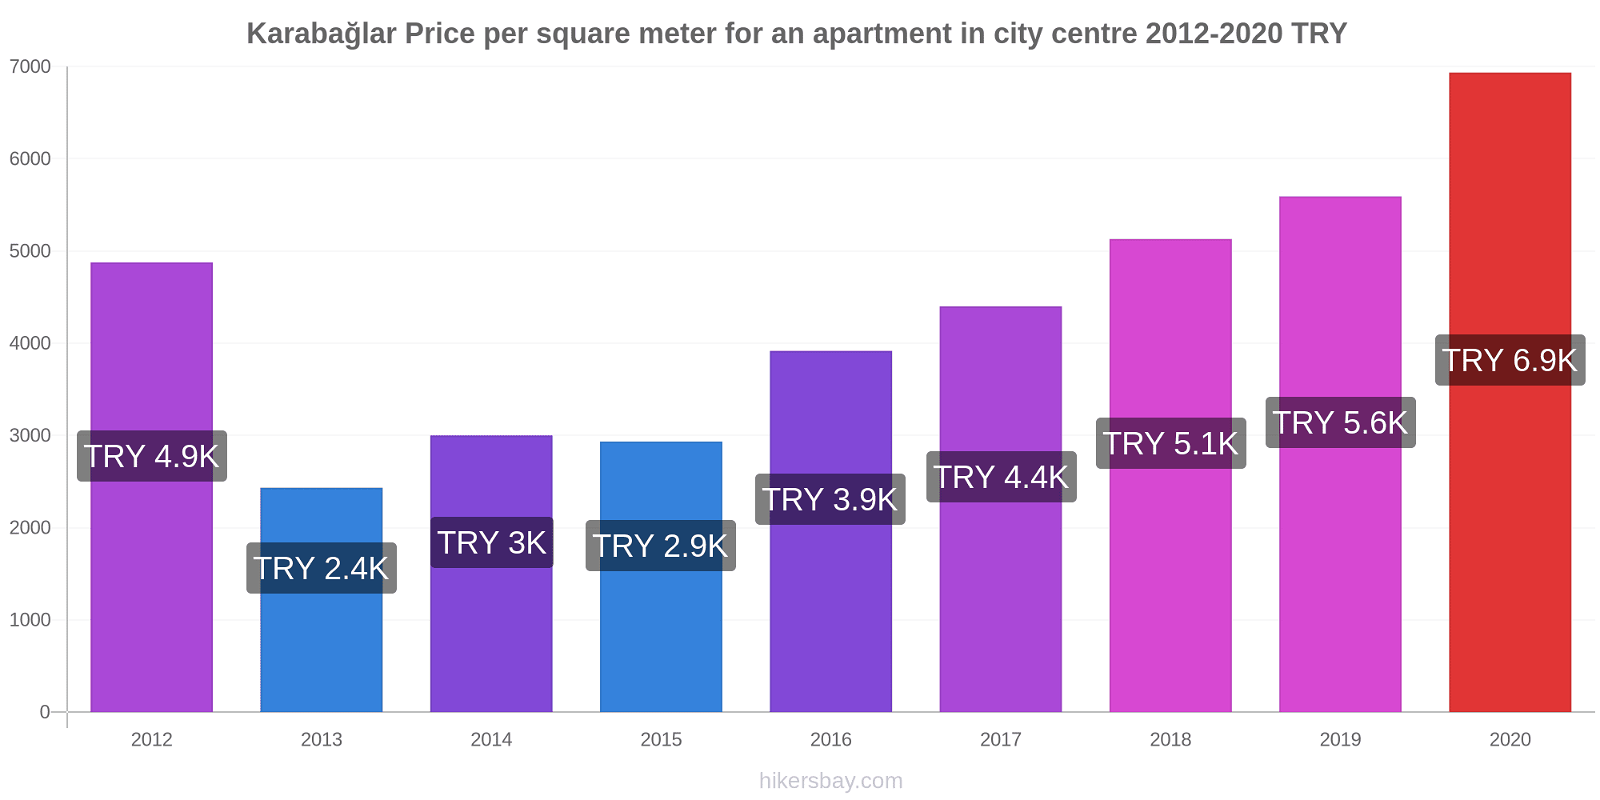 Karabağlar price changes Price per square meter for an apartment in city centre hikersbay.com